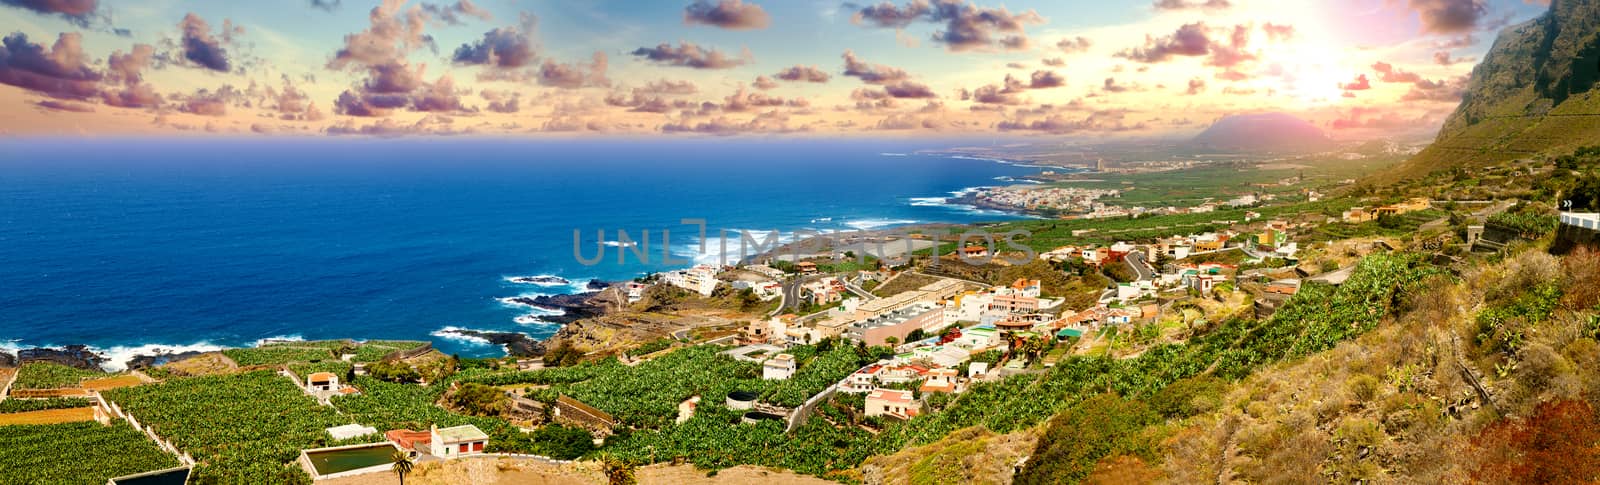 Landmark and tourism in Canary Islands.Spain beachs  by carloscastilla